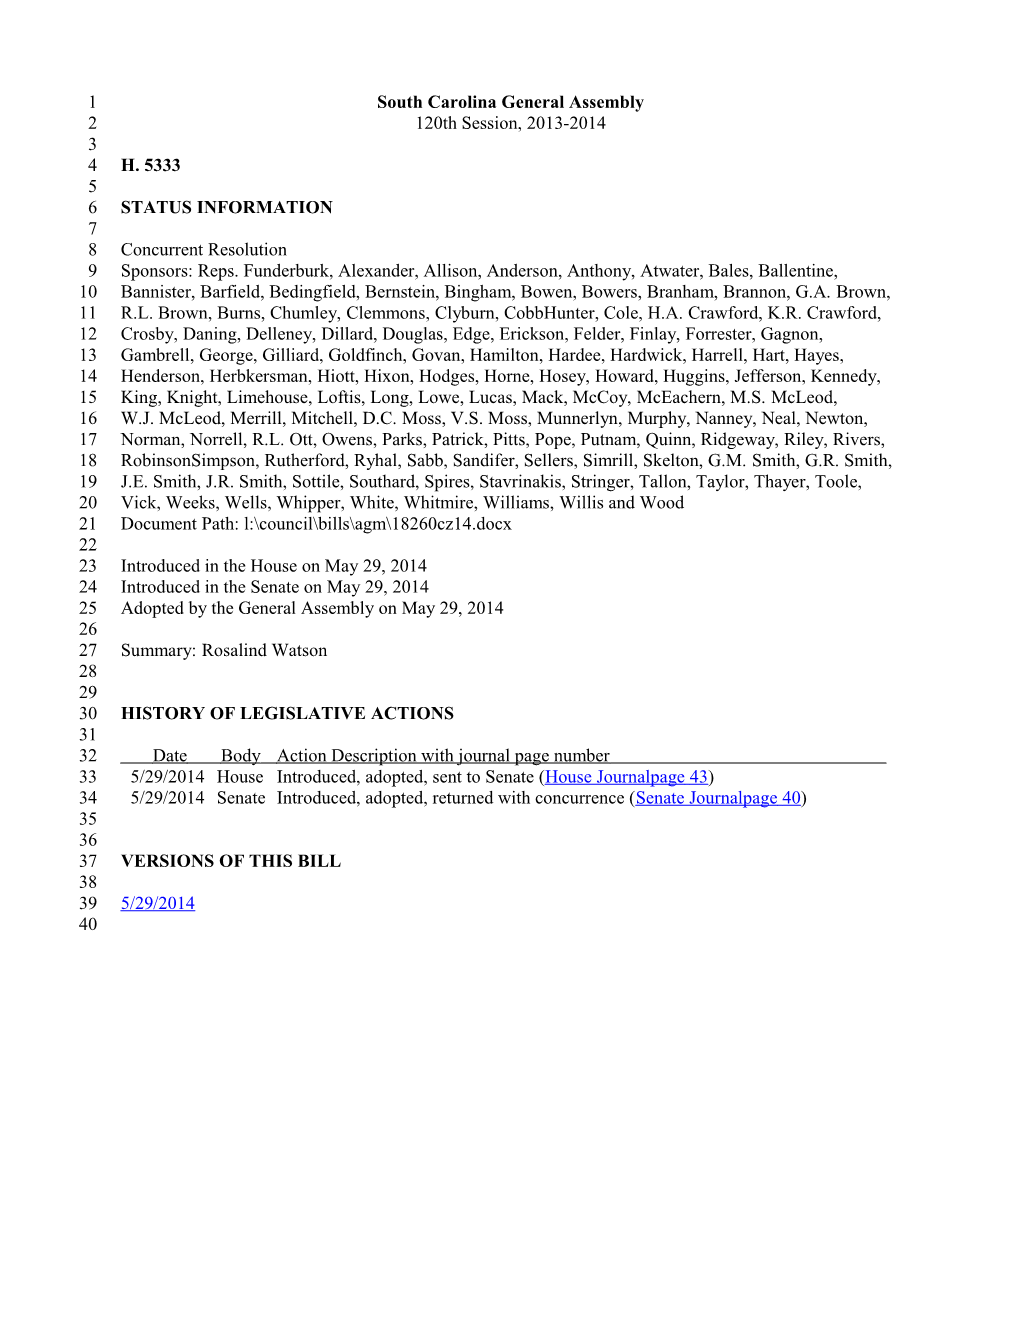 2013-2014 Bill 5333: Rosalind Watson - South Carolina Legislature Online